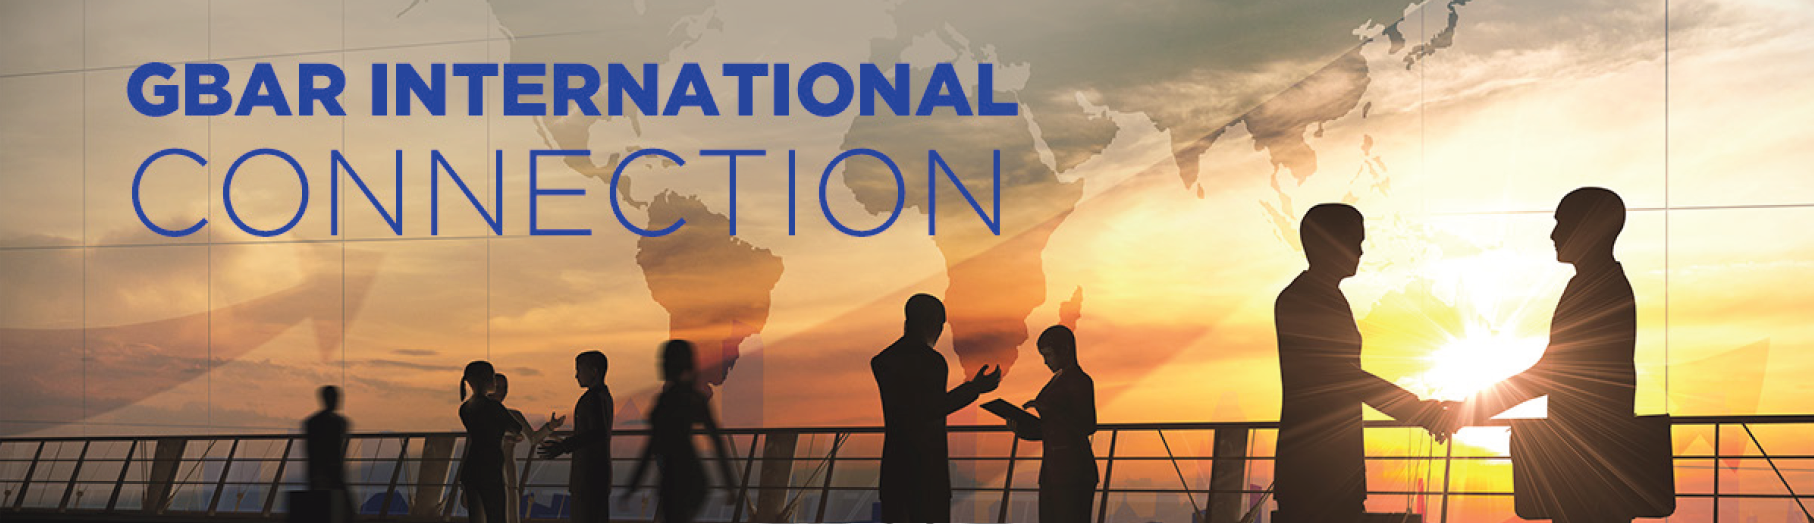 International Connection: Customs, Culture & Best Practices